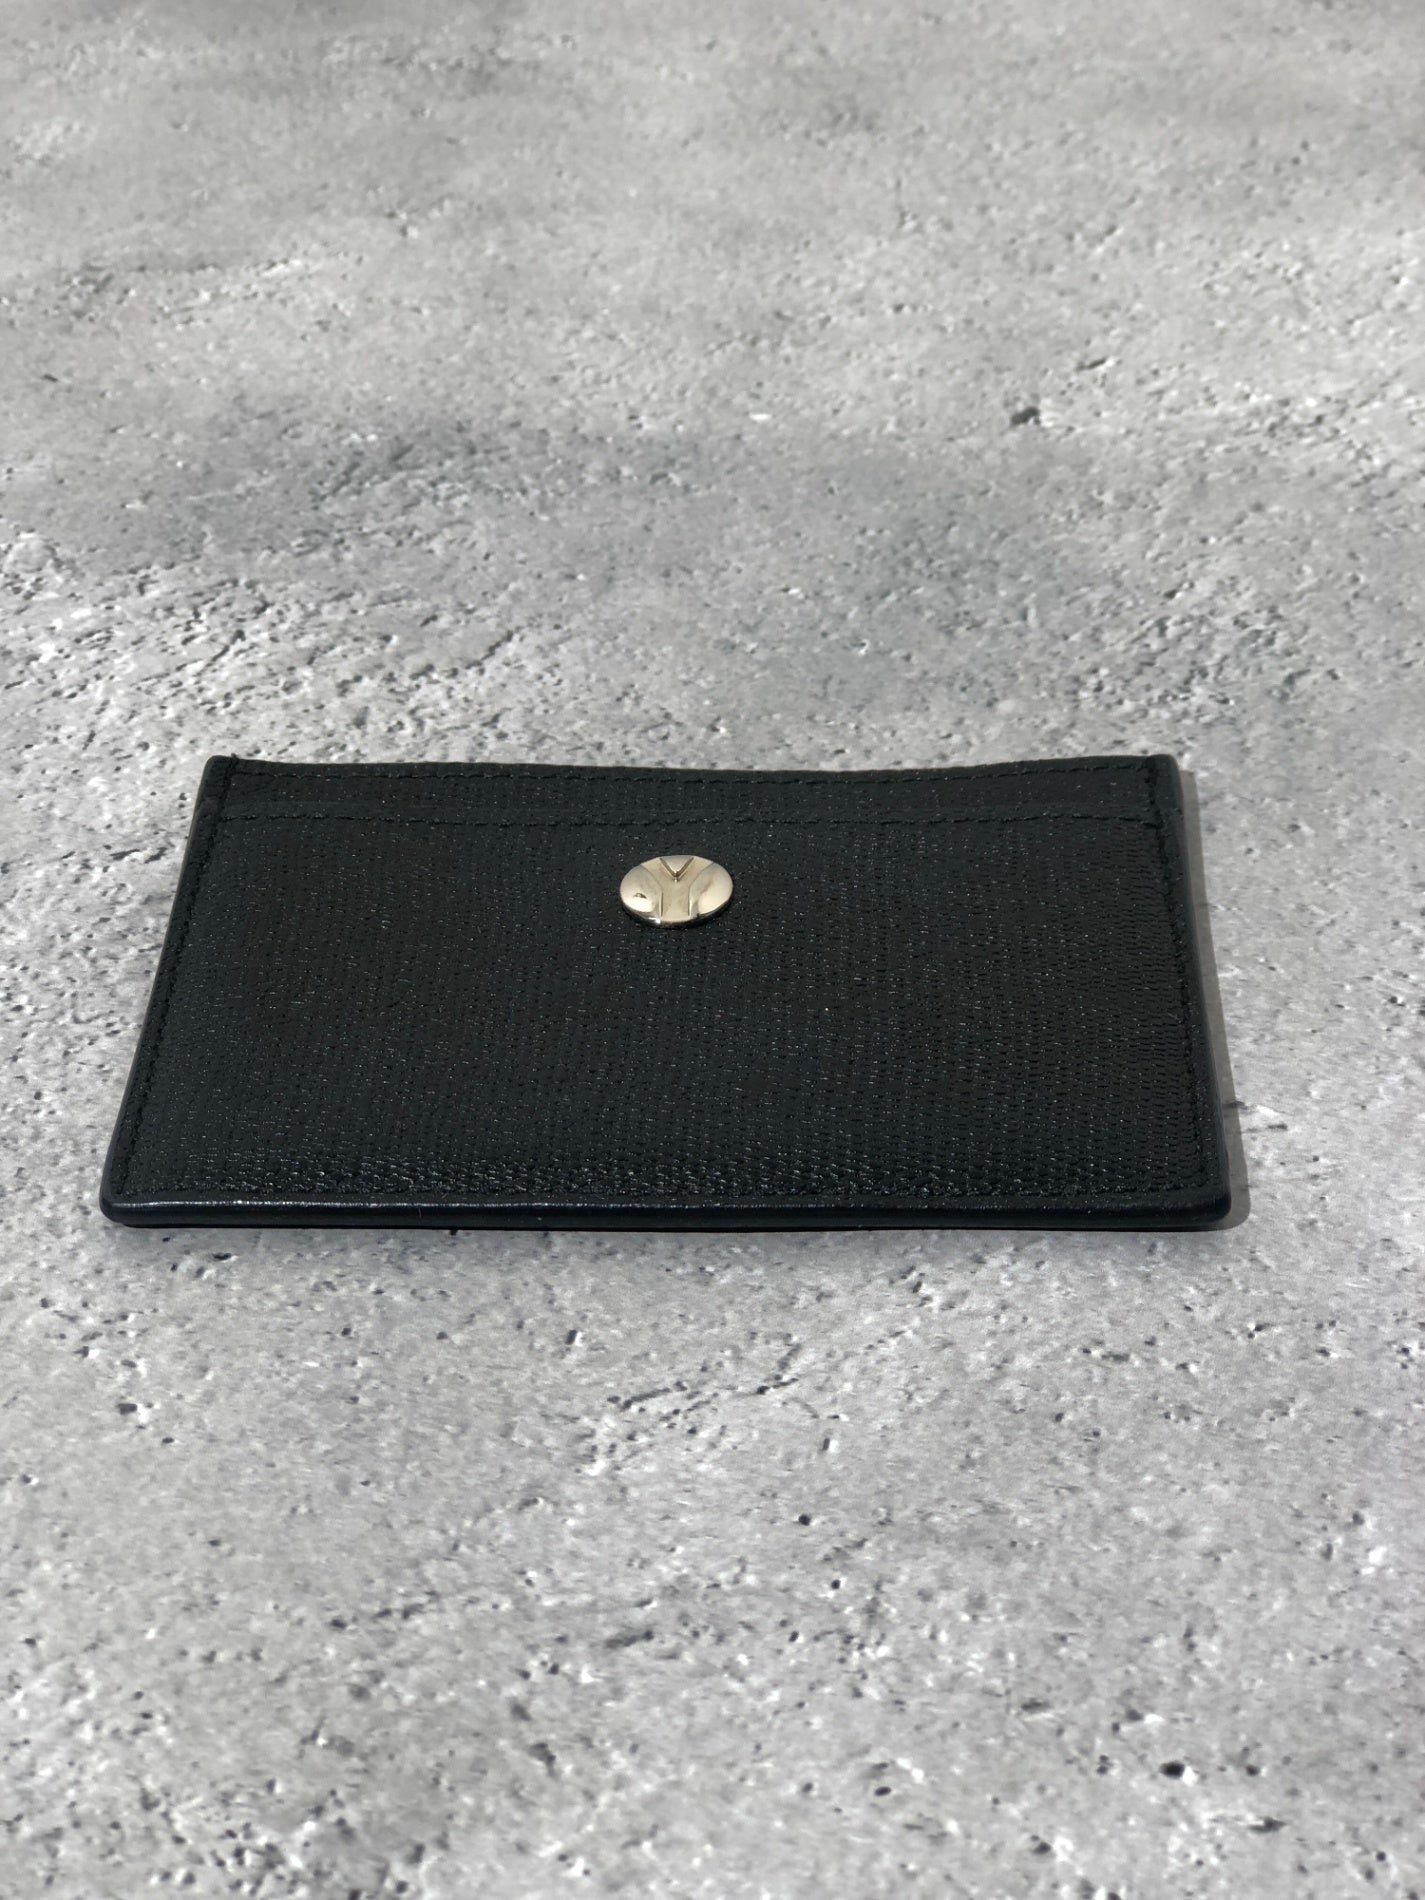 Yves Saint Laurent Leather Card holder Black Vintage 4bm2fd